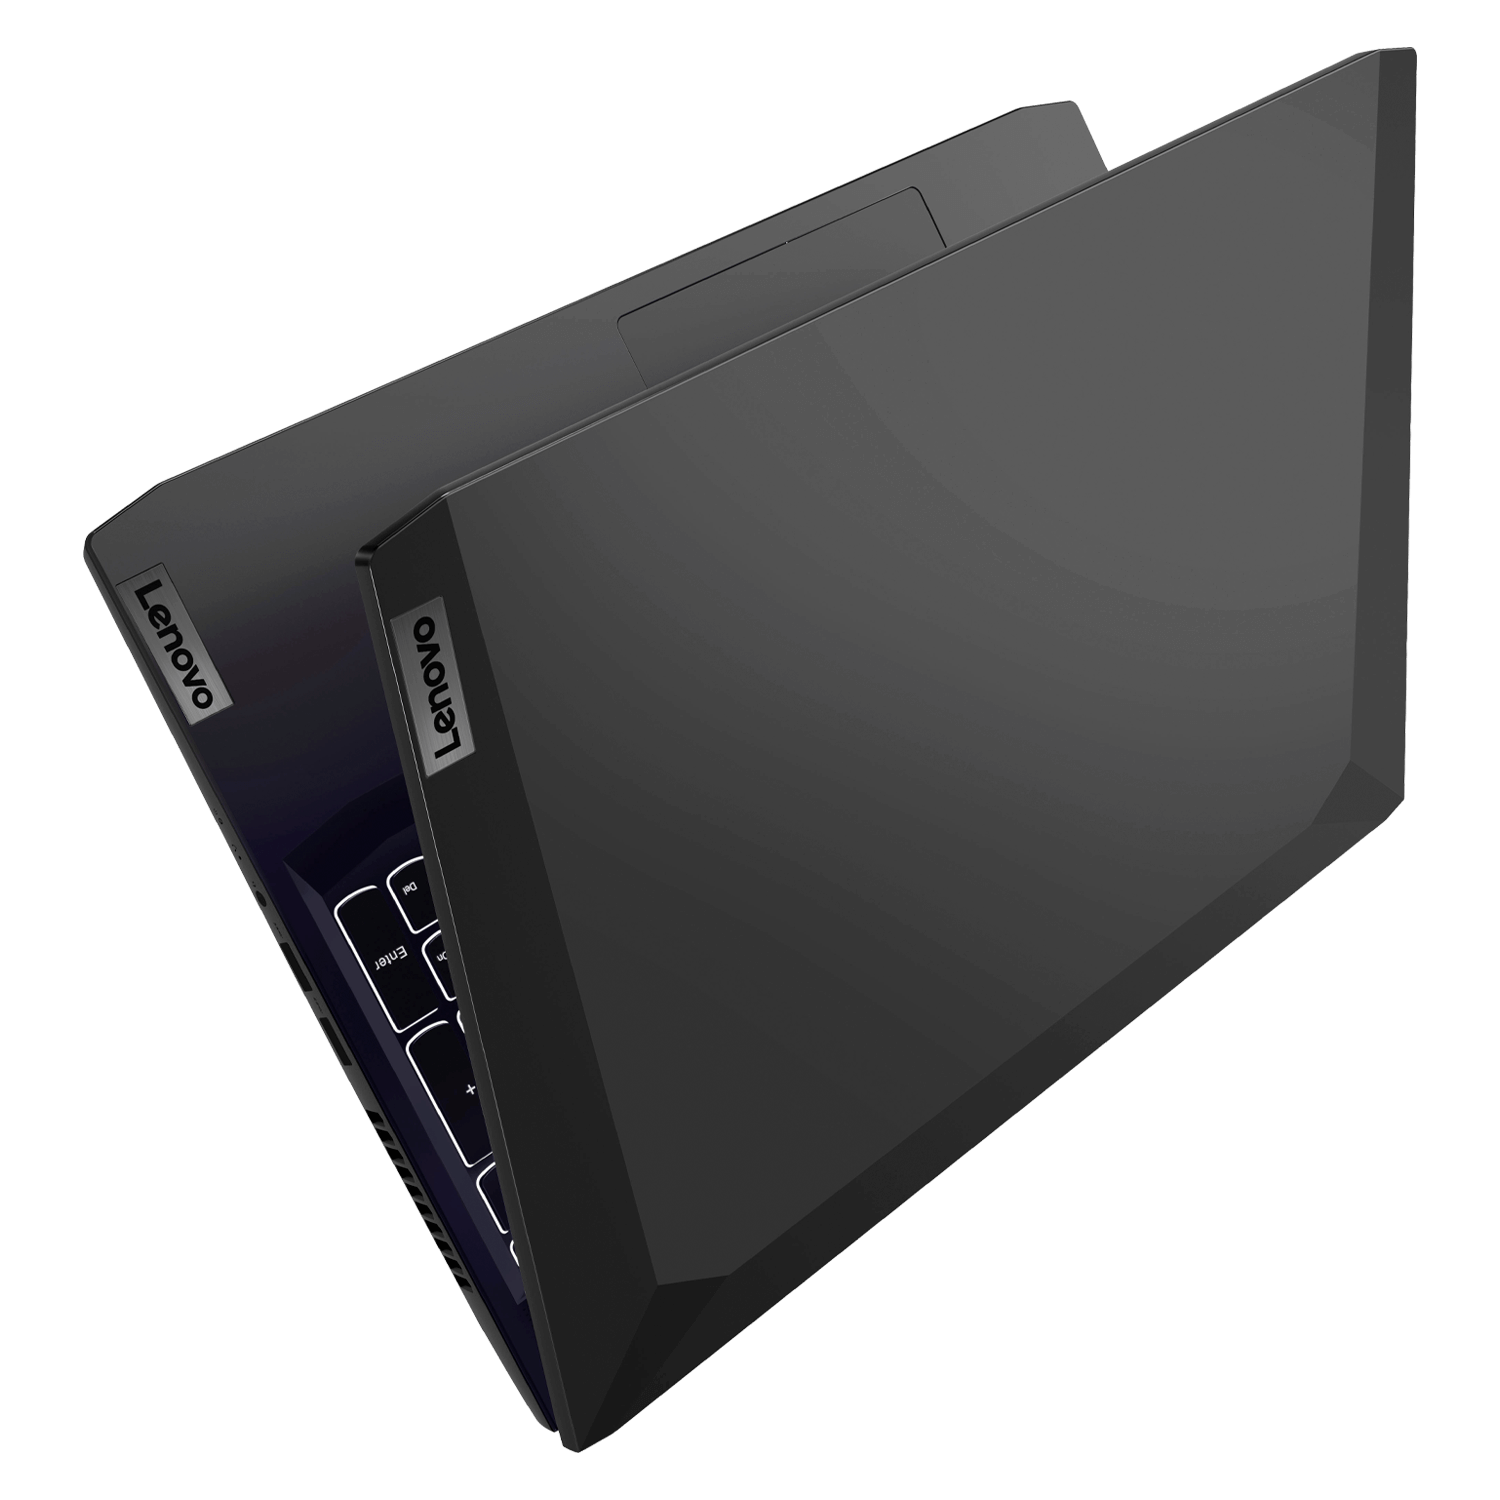 Notebook Lenovo 82K1015CUS I5-11300H 8GB / 256GB / Tela 15.6 / GTX1650 4GB